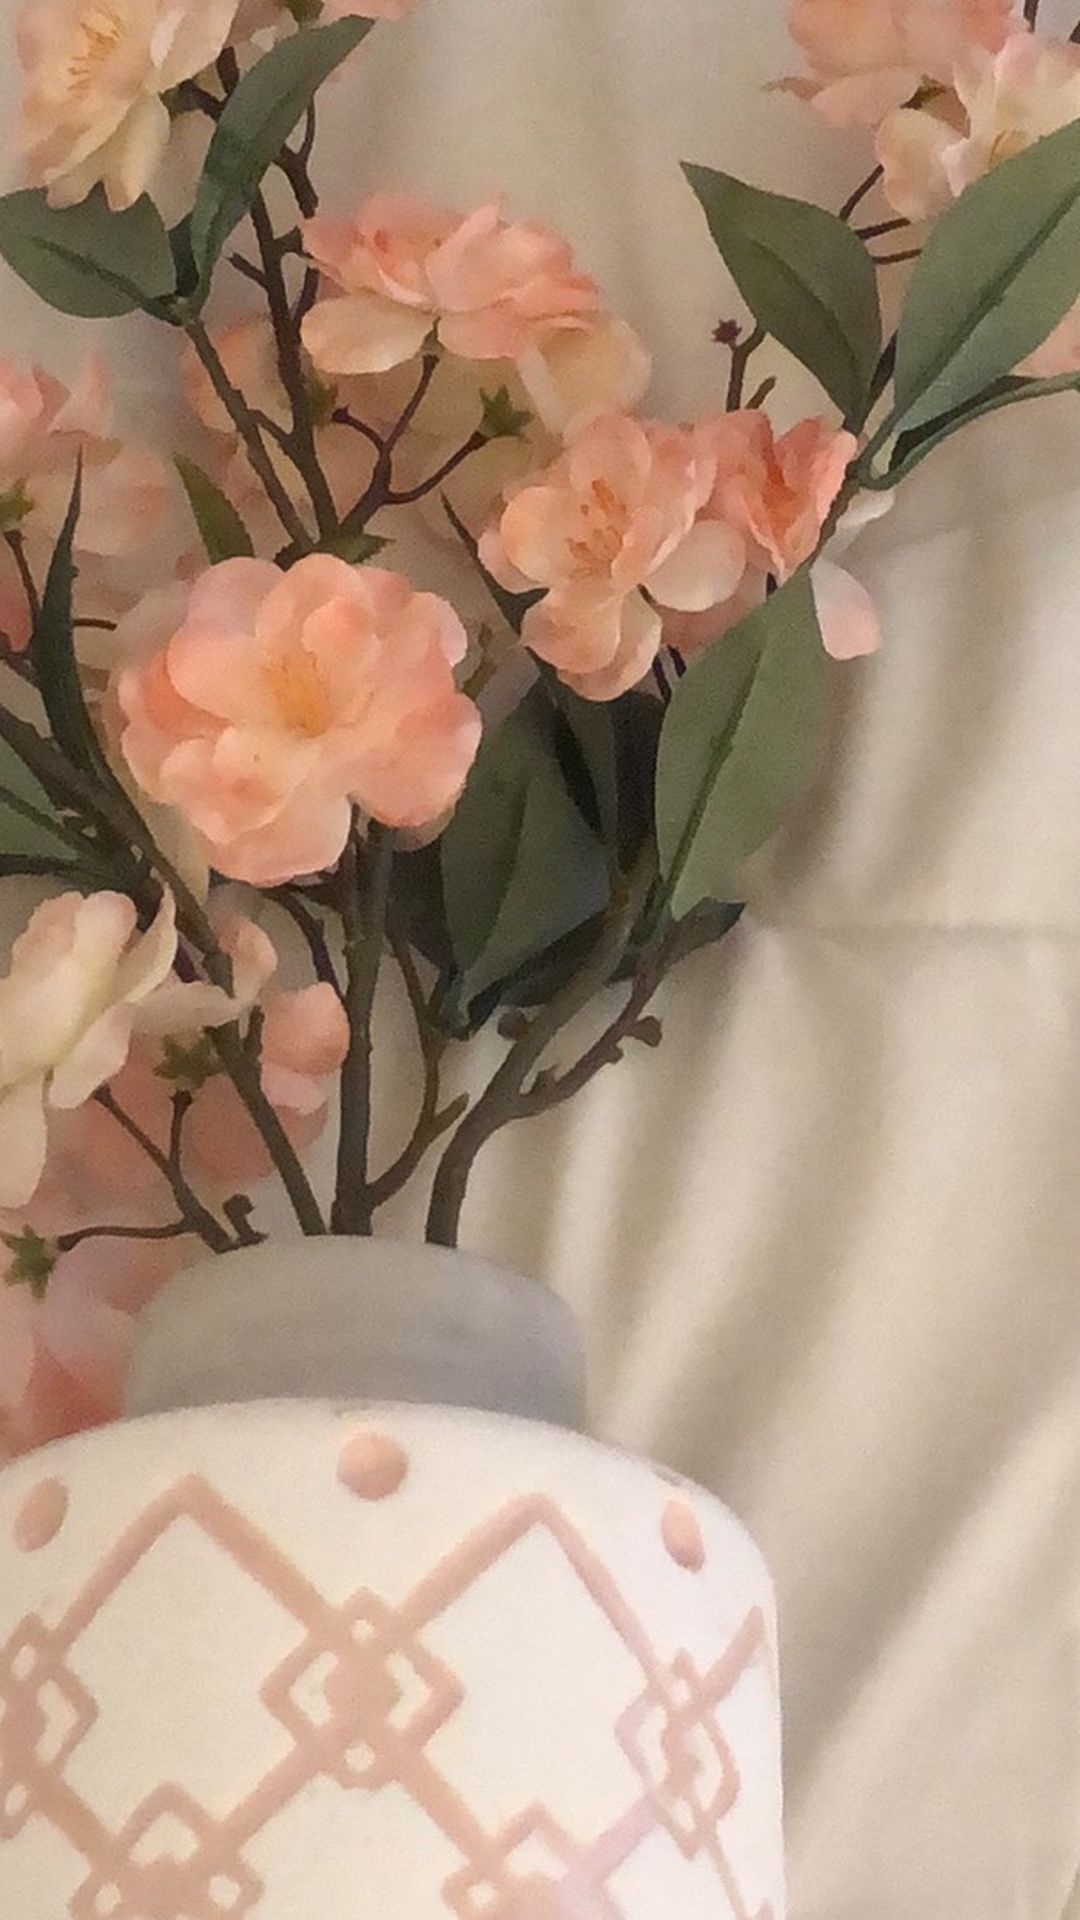 Vase/flowers